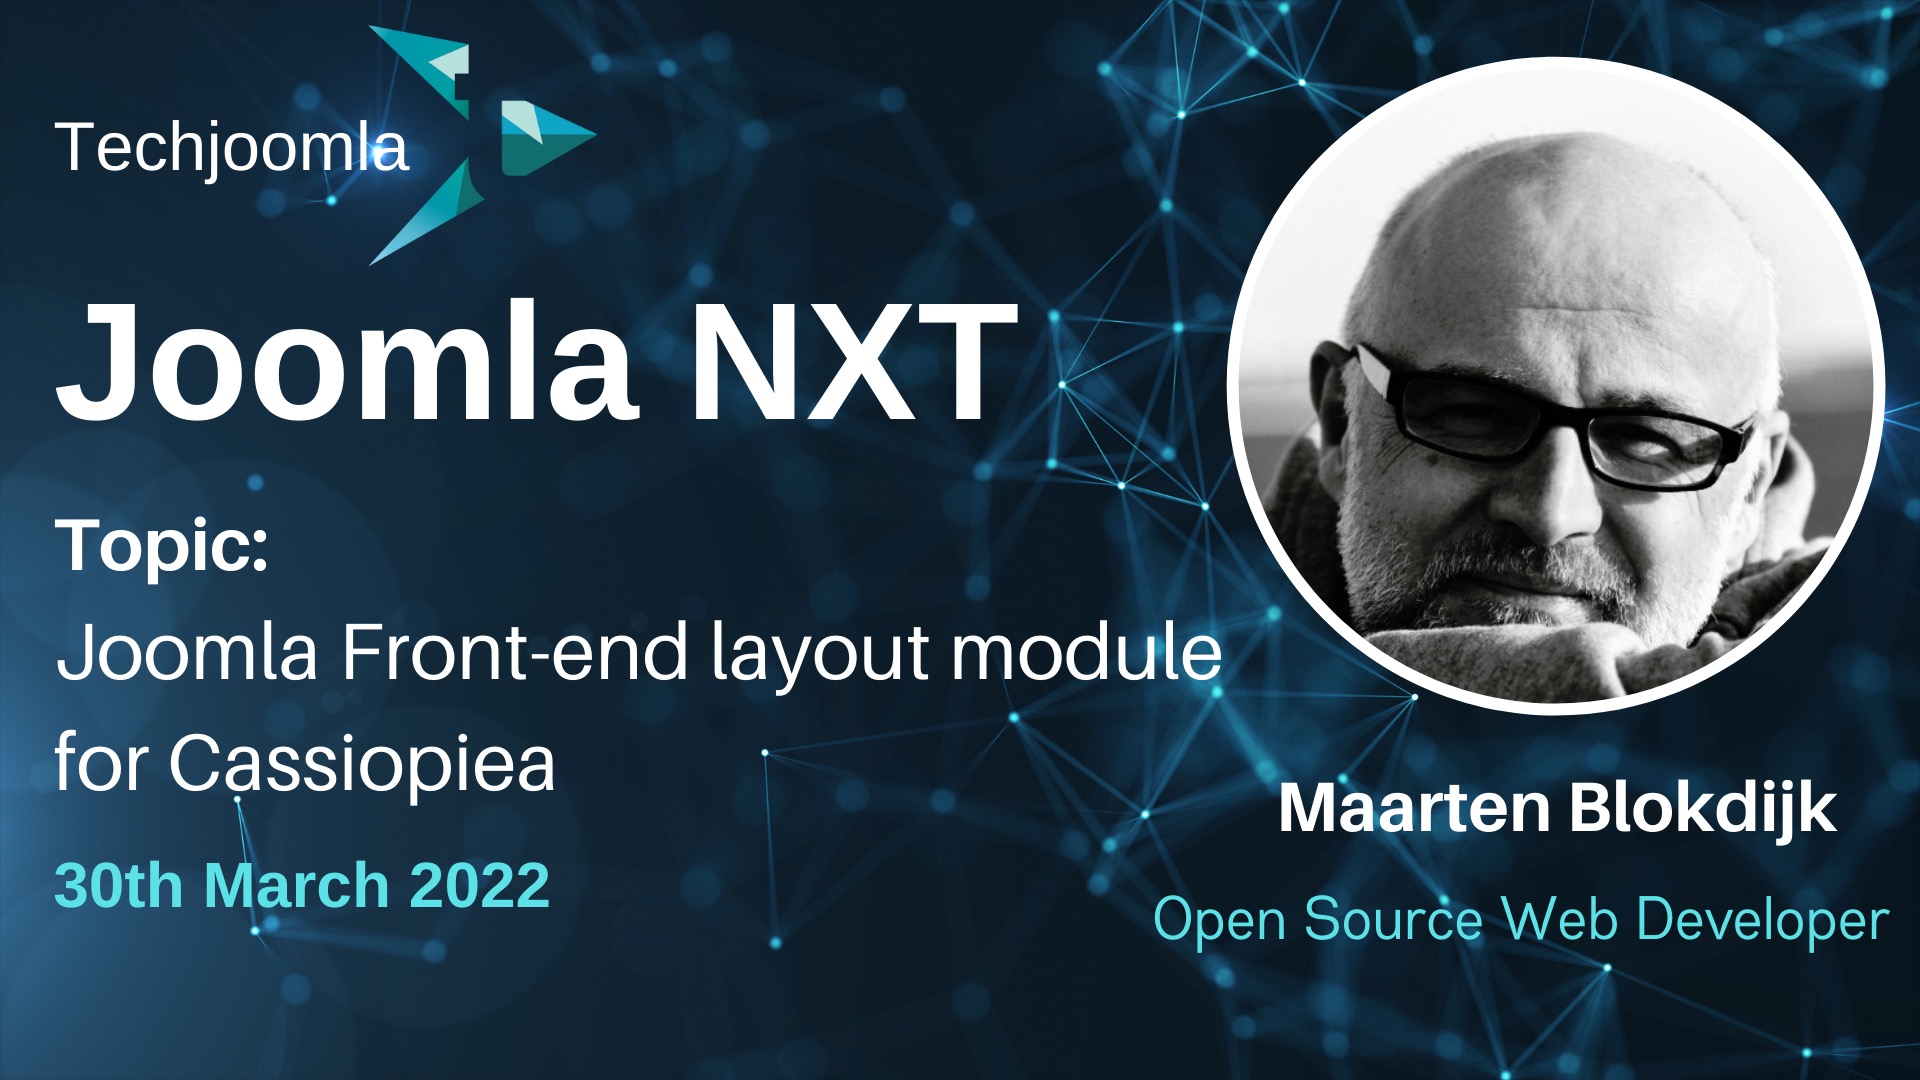 Joomla NXT March 2022 - Joomla Front-end layout module for Cassiopiea